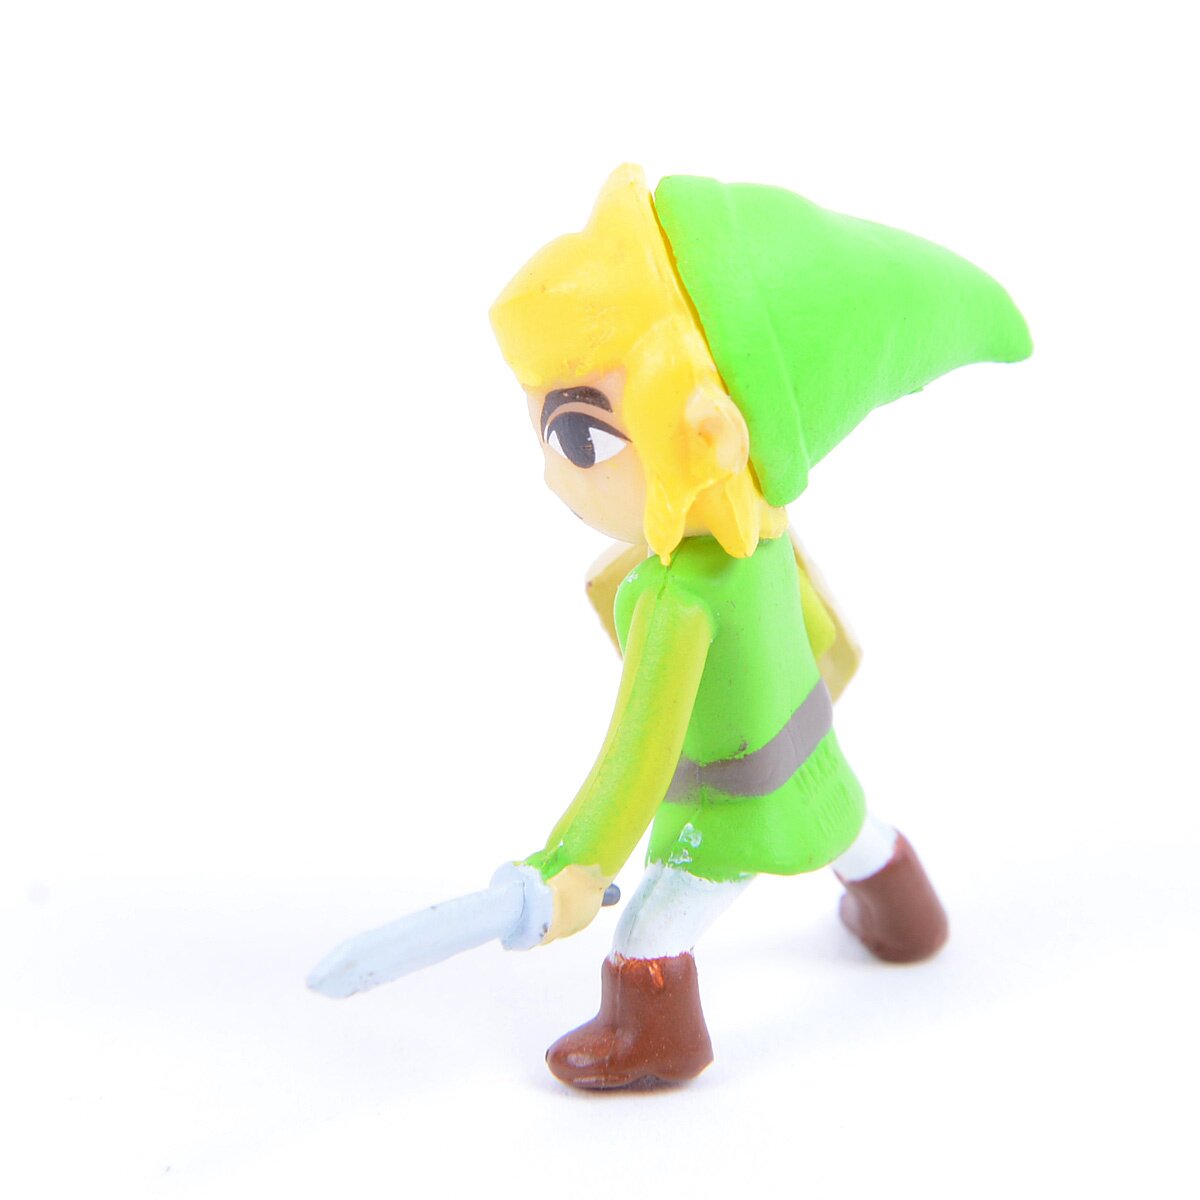 Zelda Figure Collection: Nintendo - Tokyo Otaku Mode (TOM)